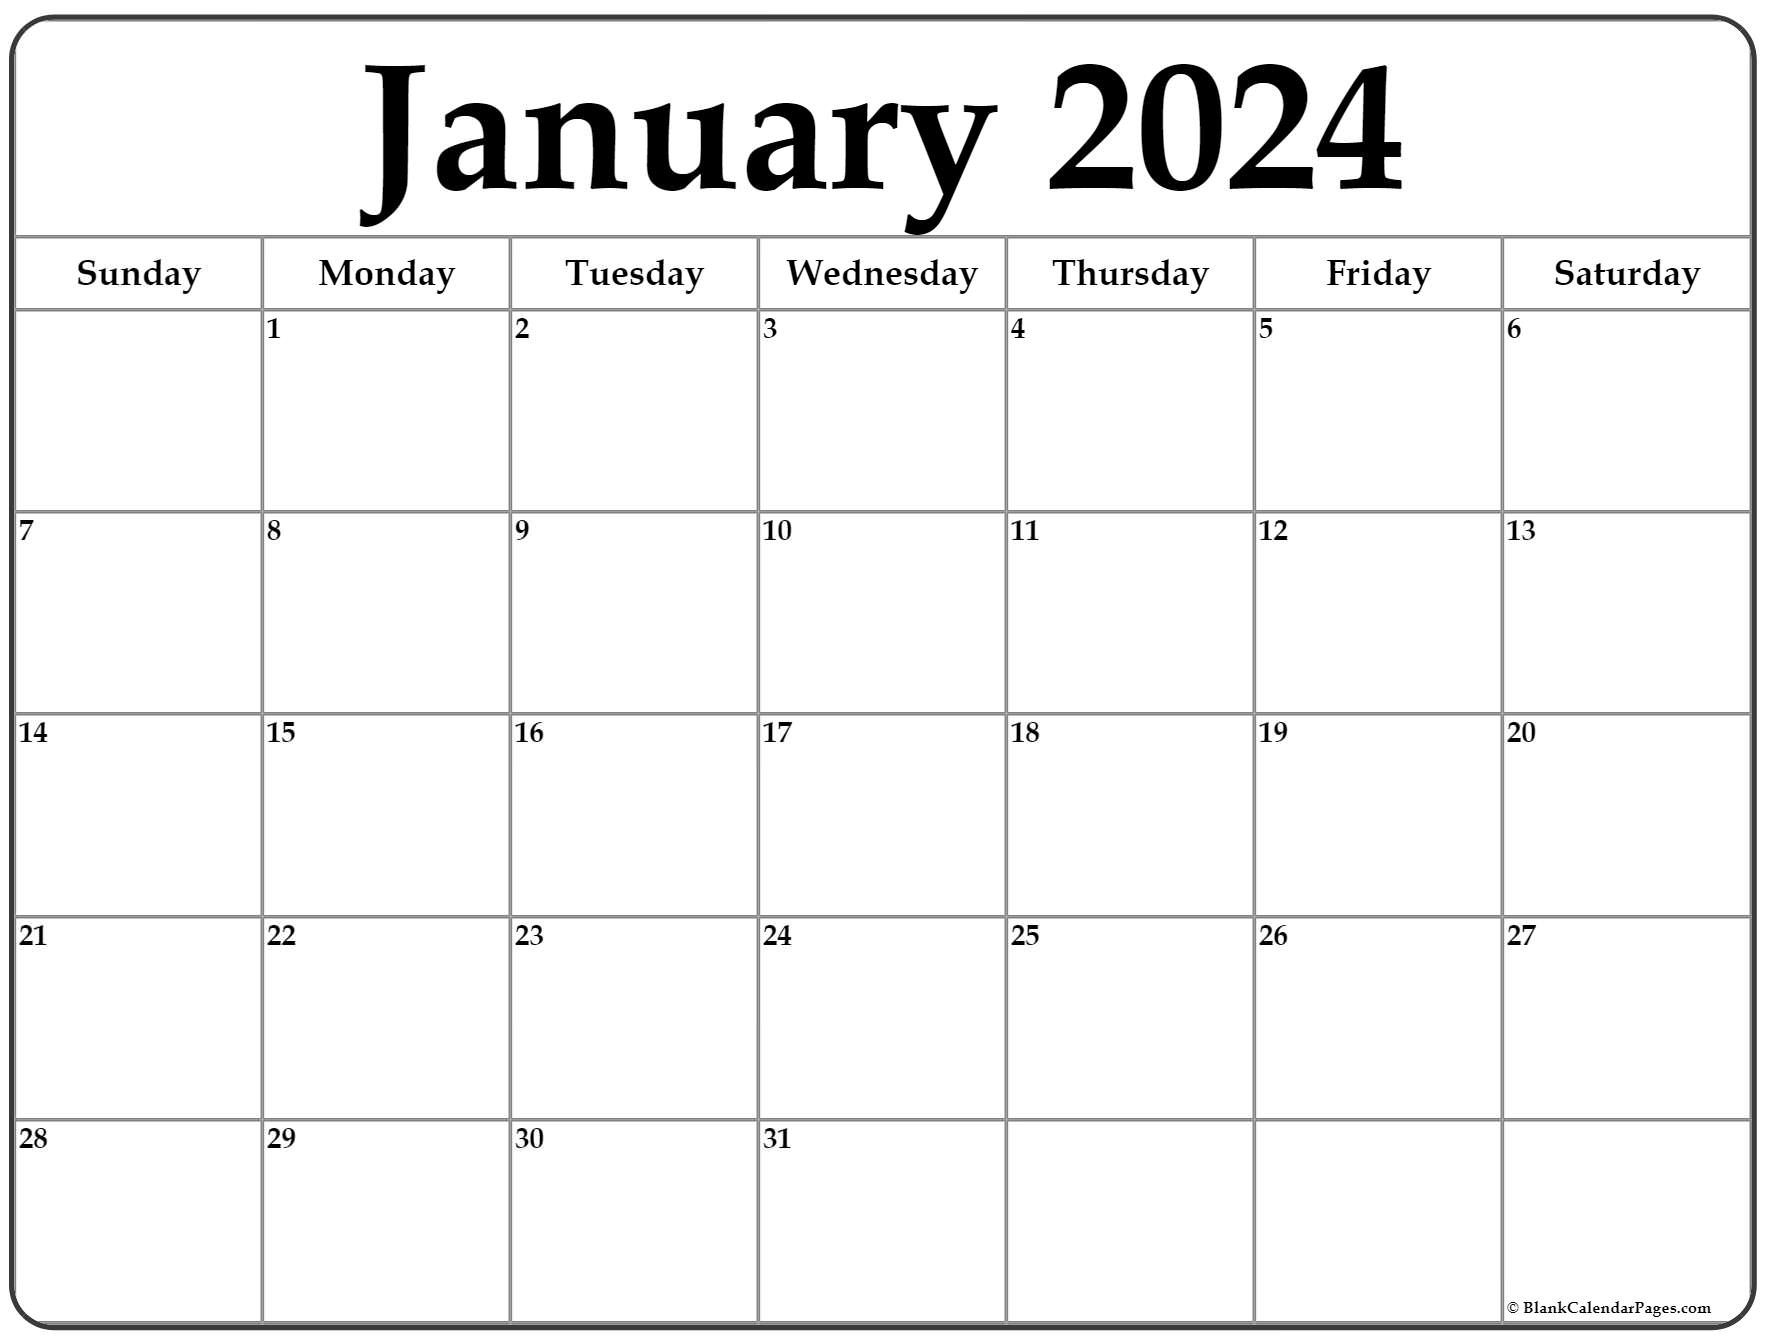 January 2024 Calendar | Free Printable Calendar for 2024 Free Printable Monthly Calendar